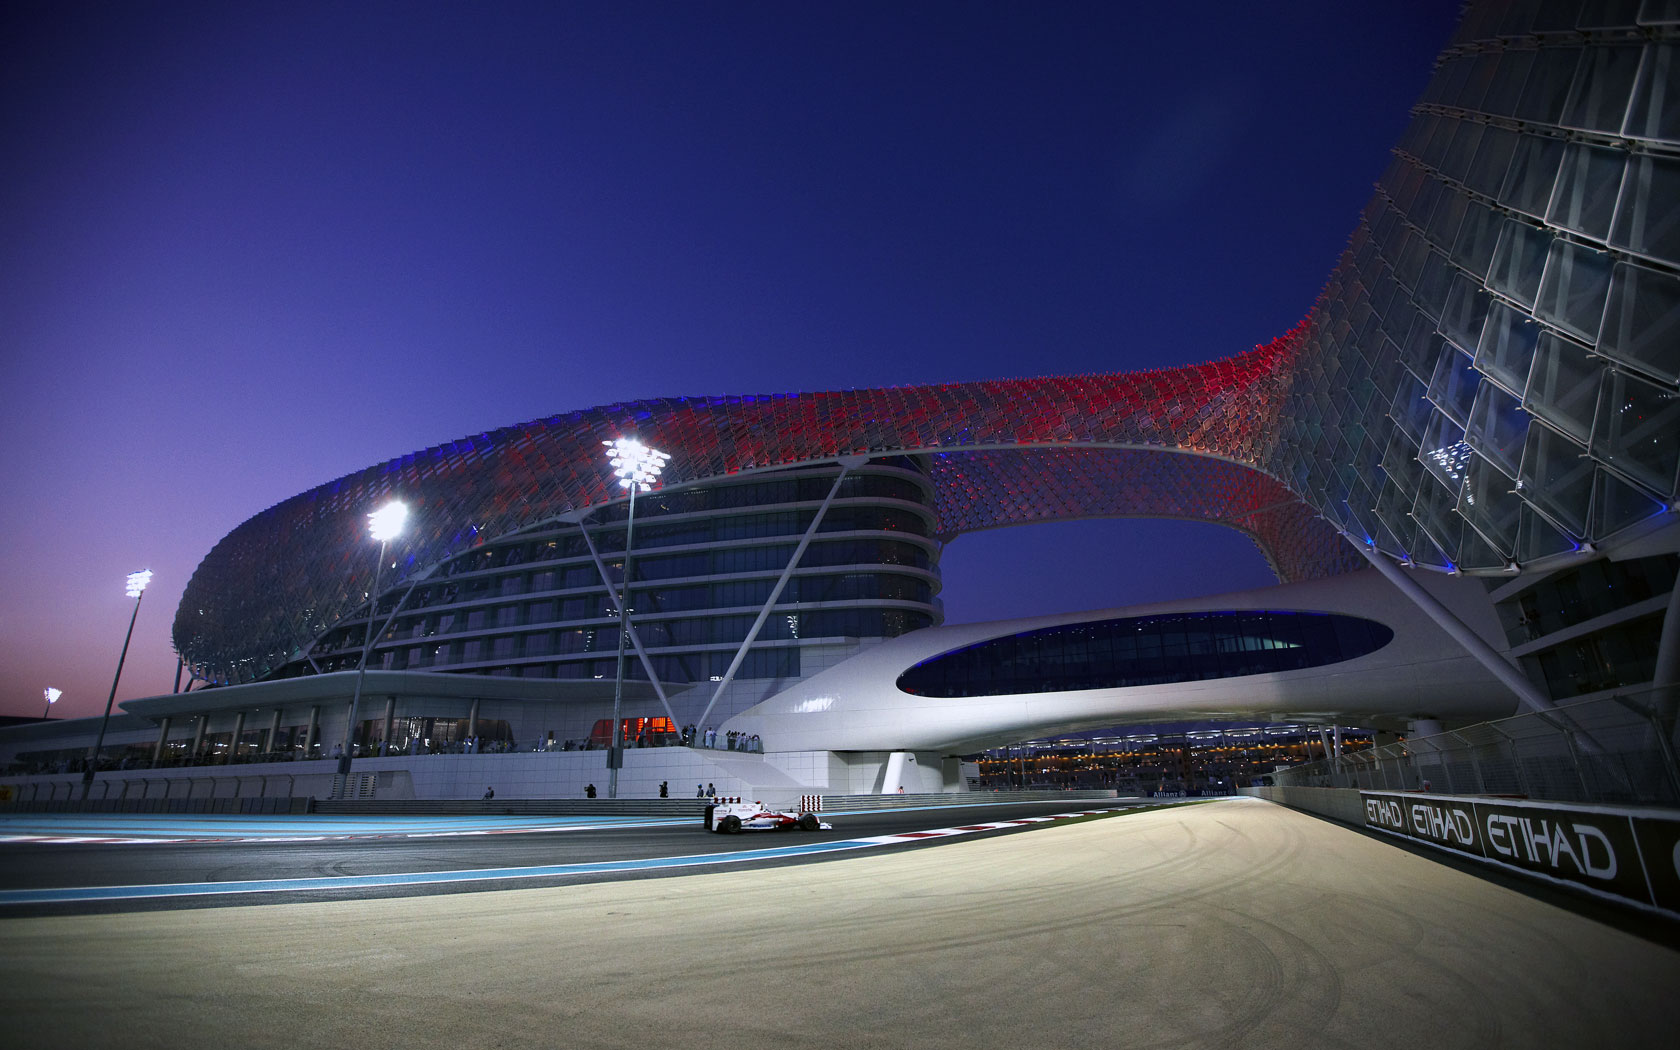 HD Wallpaper Formula Grand Prix Of Abu Dhabi F1 Fansite